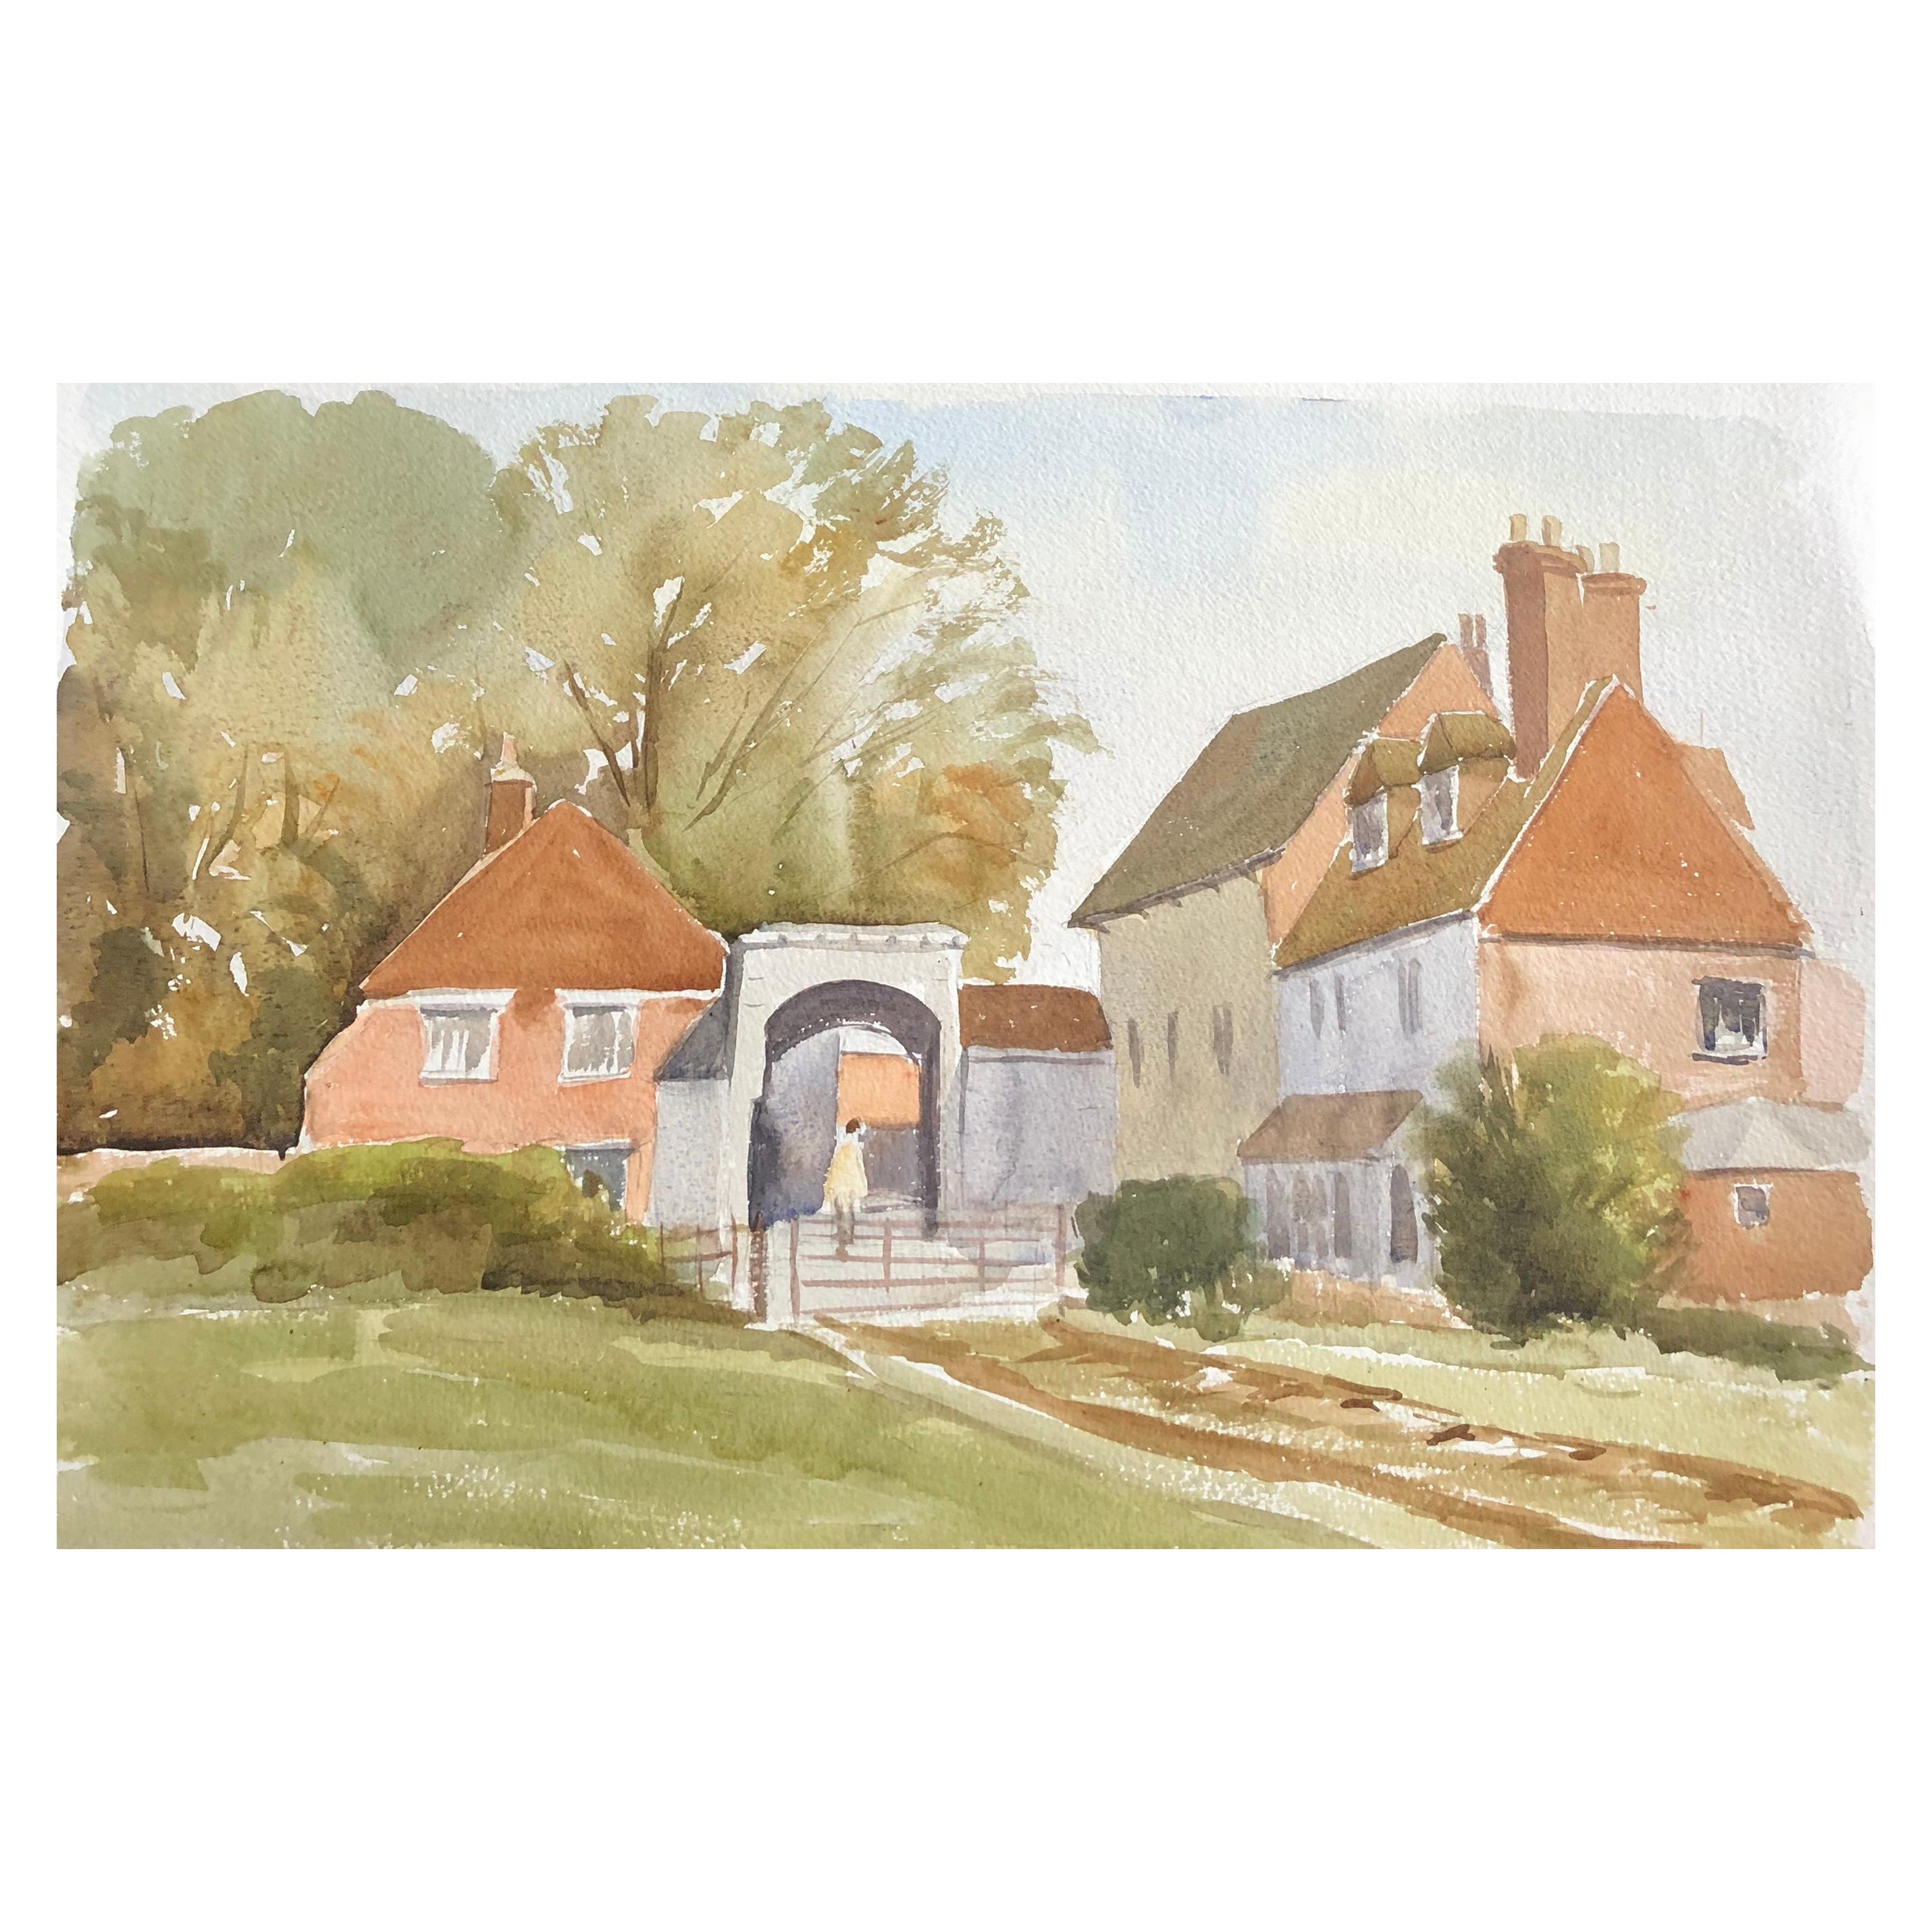 Salisbury with Arch, Original British Watercolour Painting